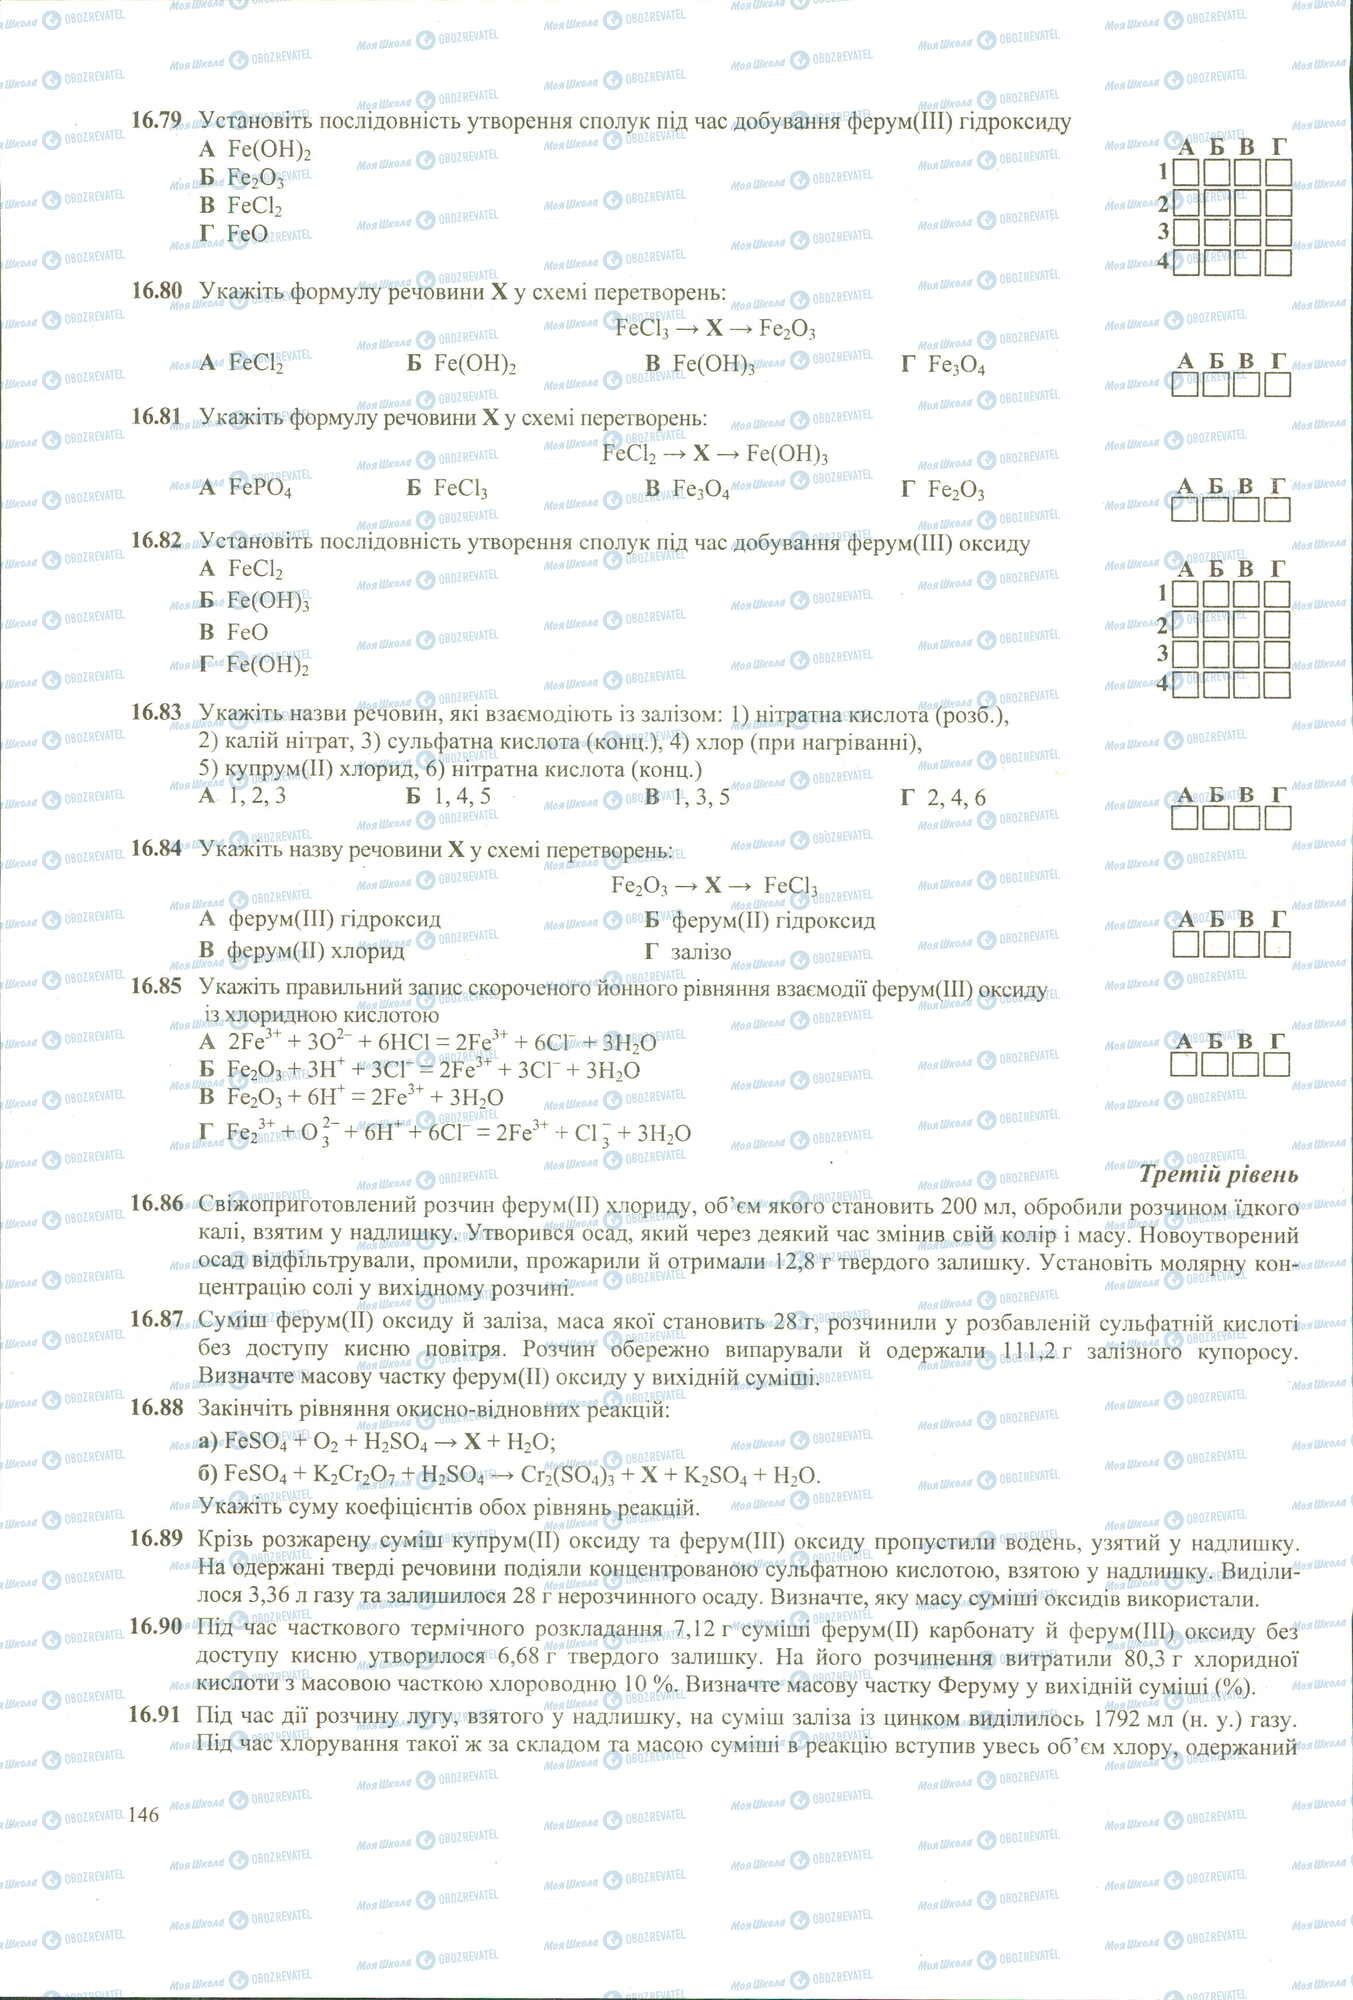 ЗНО Химия 11 класс страница 79-91